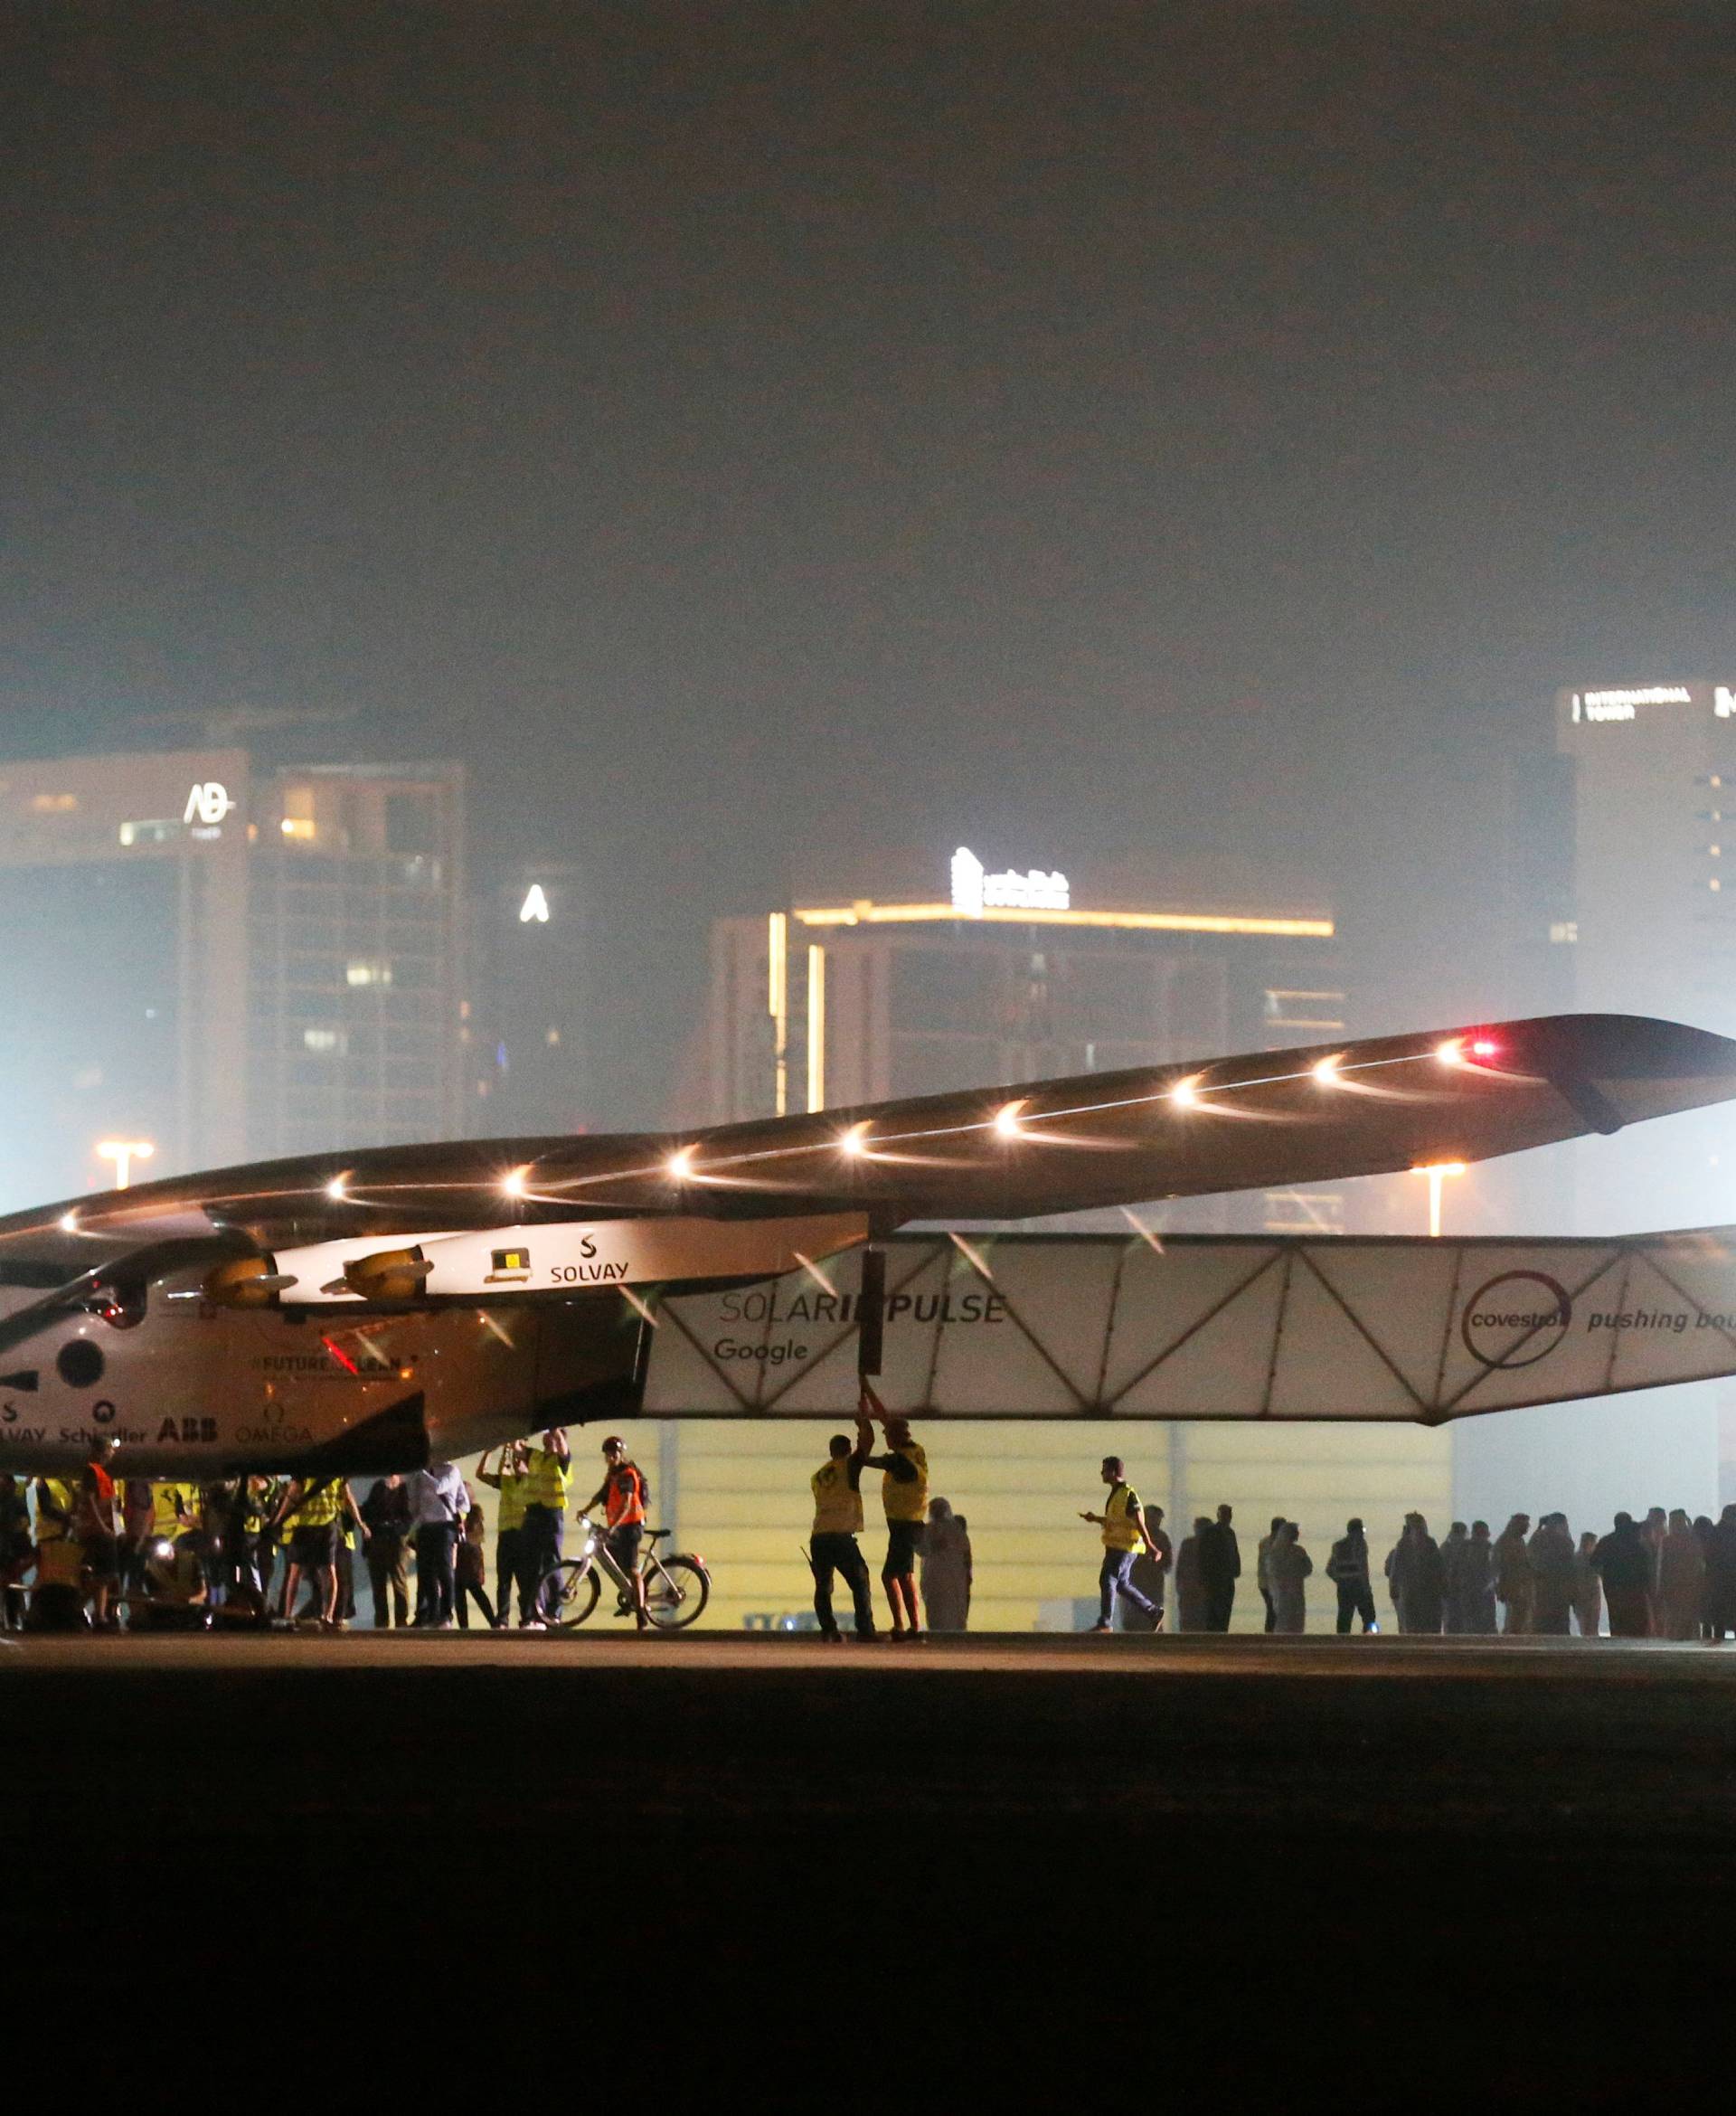 Solar Impulse 2, a solar powered plane, arrives at an airport in Abu Dhabi, UAE